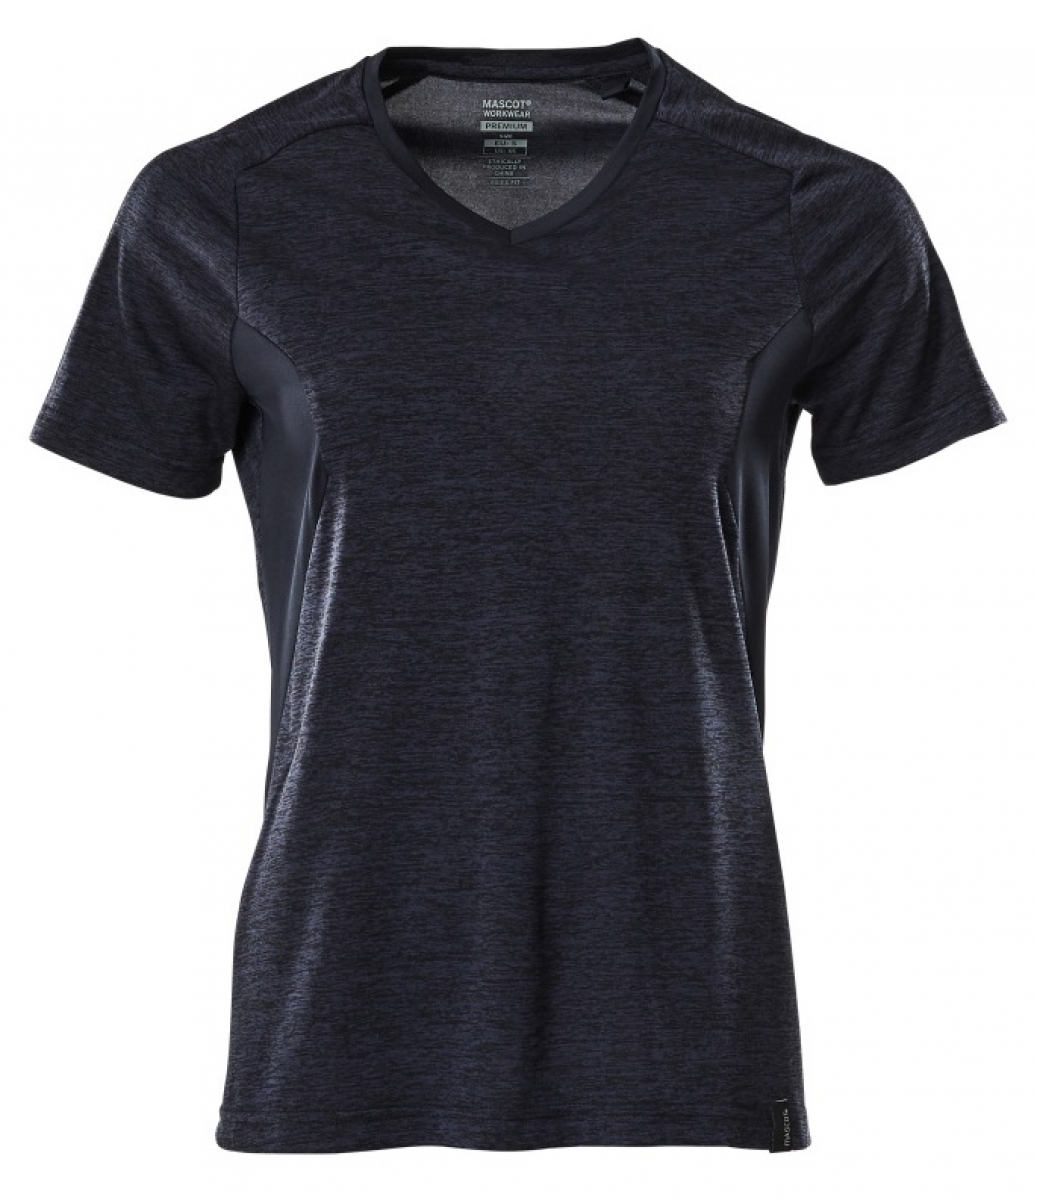 MASCOT-Worker-Shirts, Damen-T-Shirt, 150 g/m, schwarzblau